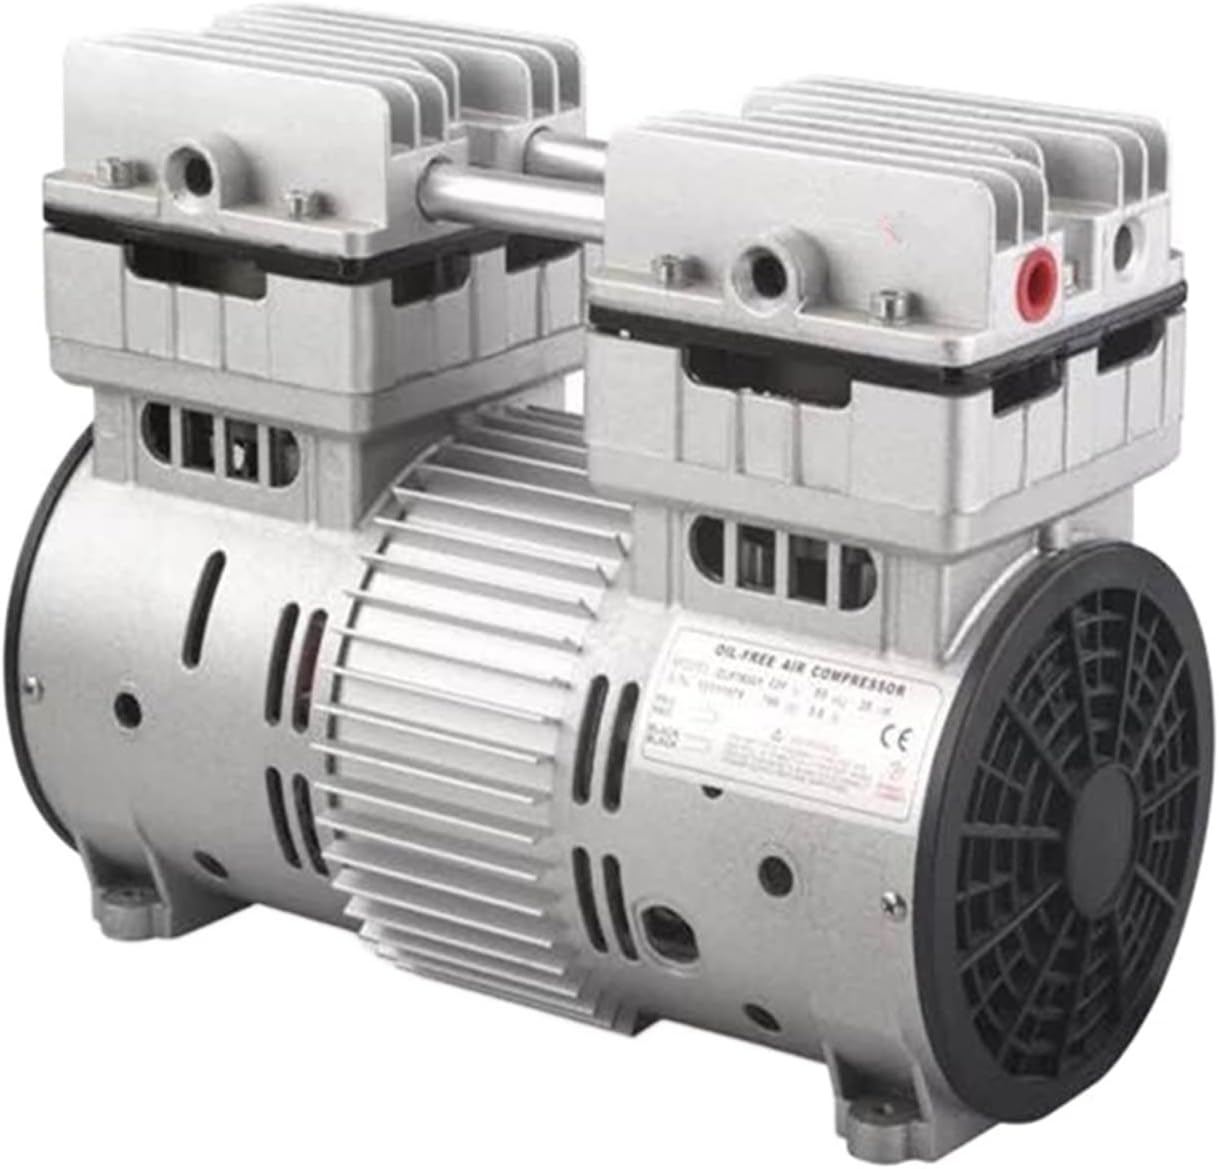 GinSan HYW-780 Piston Compressor Pump For Air Machines - 110 Volt AC, 780 Watts - $200